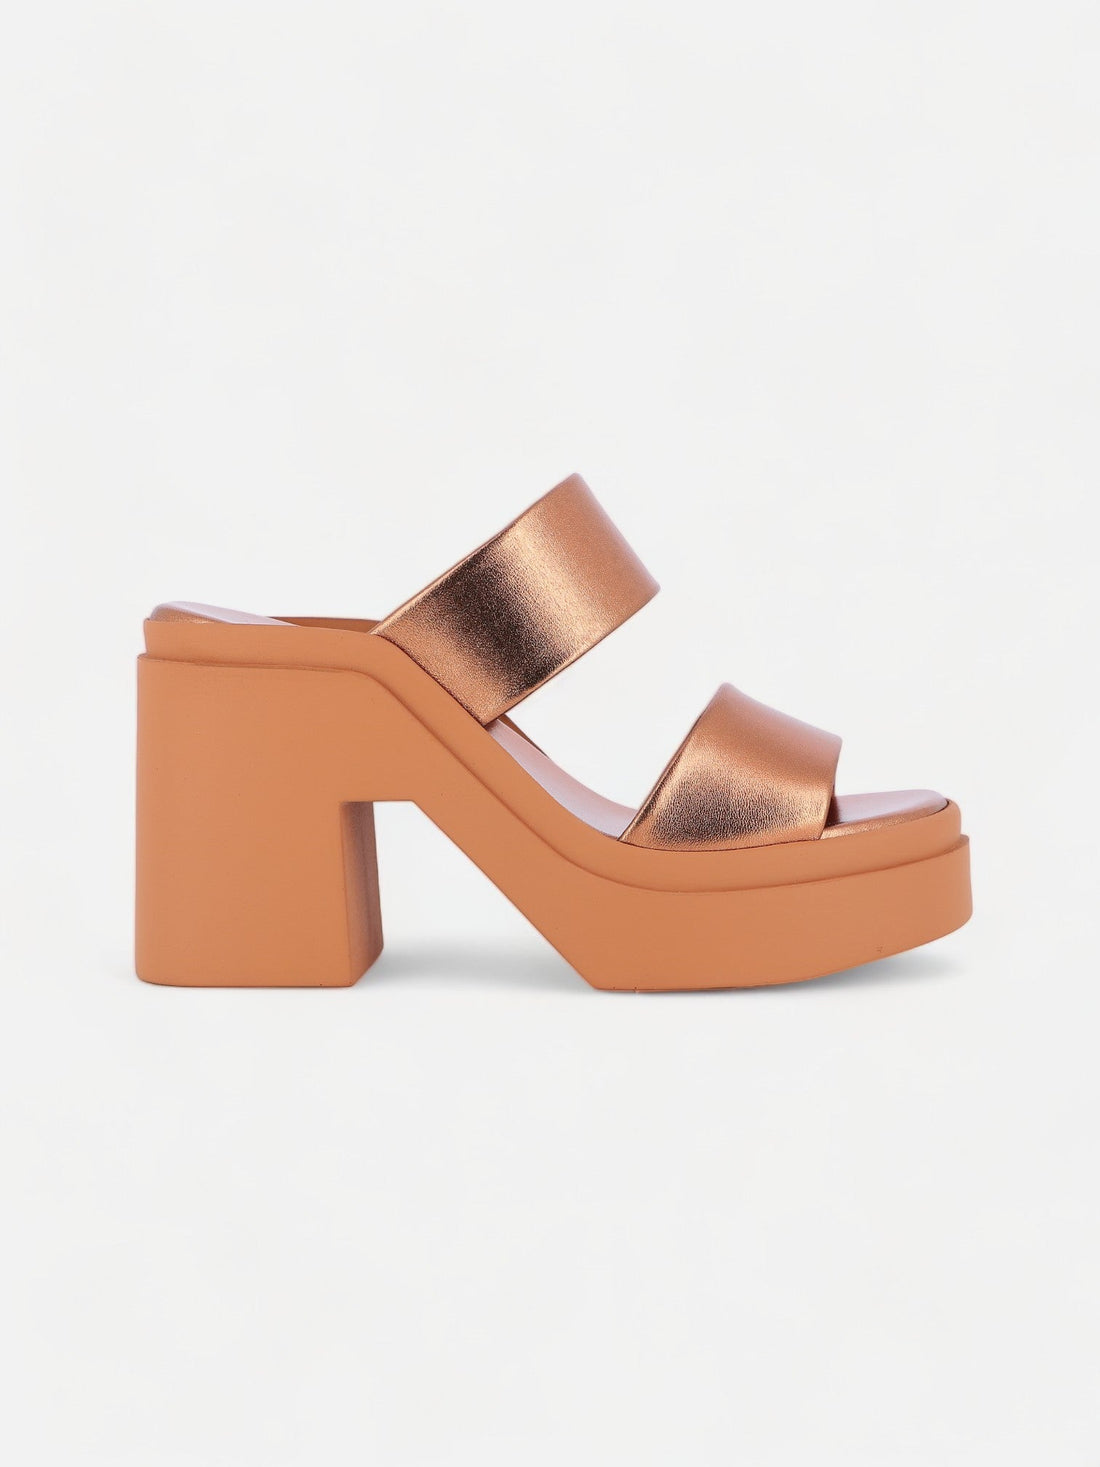 SANDALS - NEXT sandals, metallic lambskin brown - 3606063981552 - Clergerie Paris - Europe